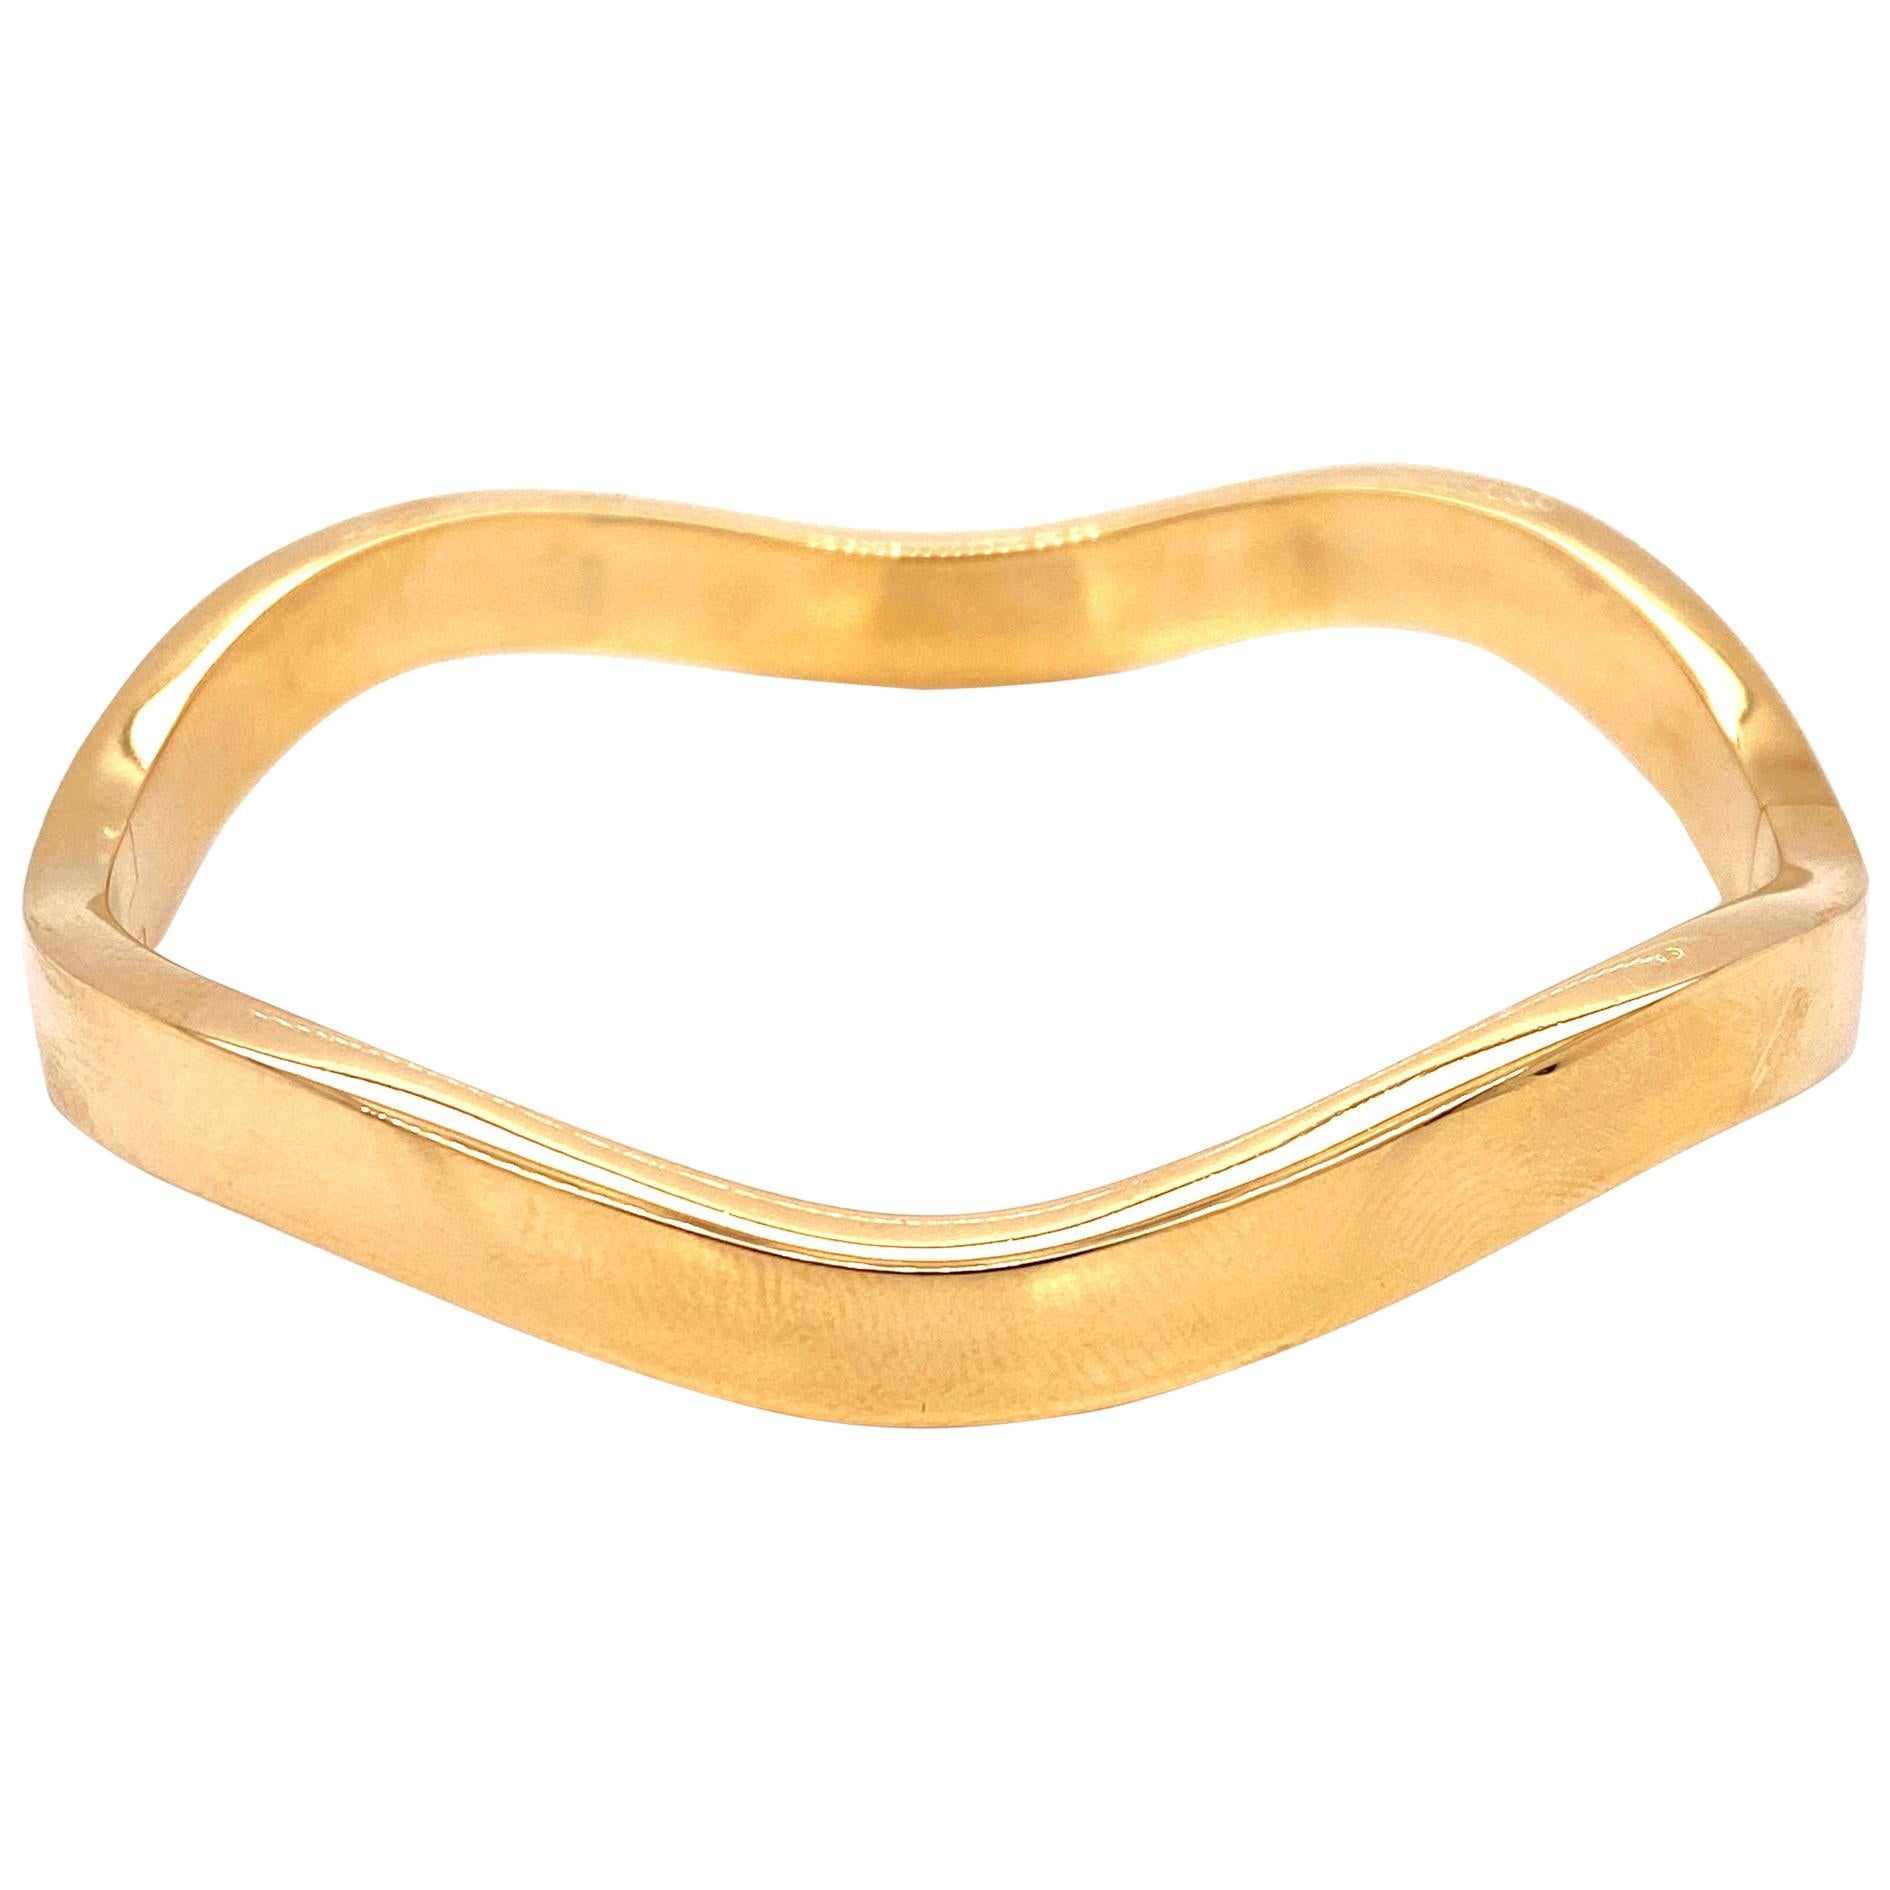 Tiffany & Co. Italy Wave 18 Karat Yellow Gold Bangle Bracelet